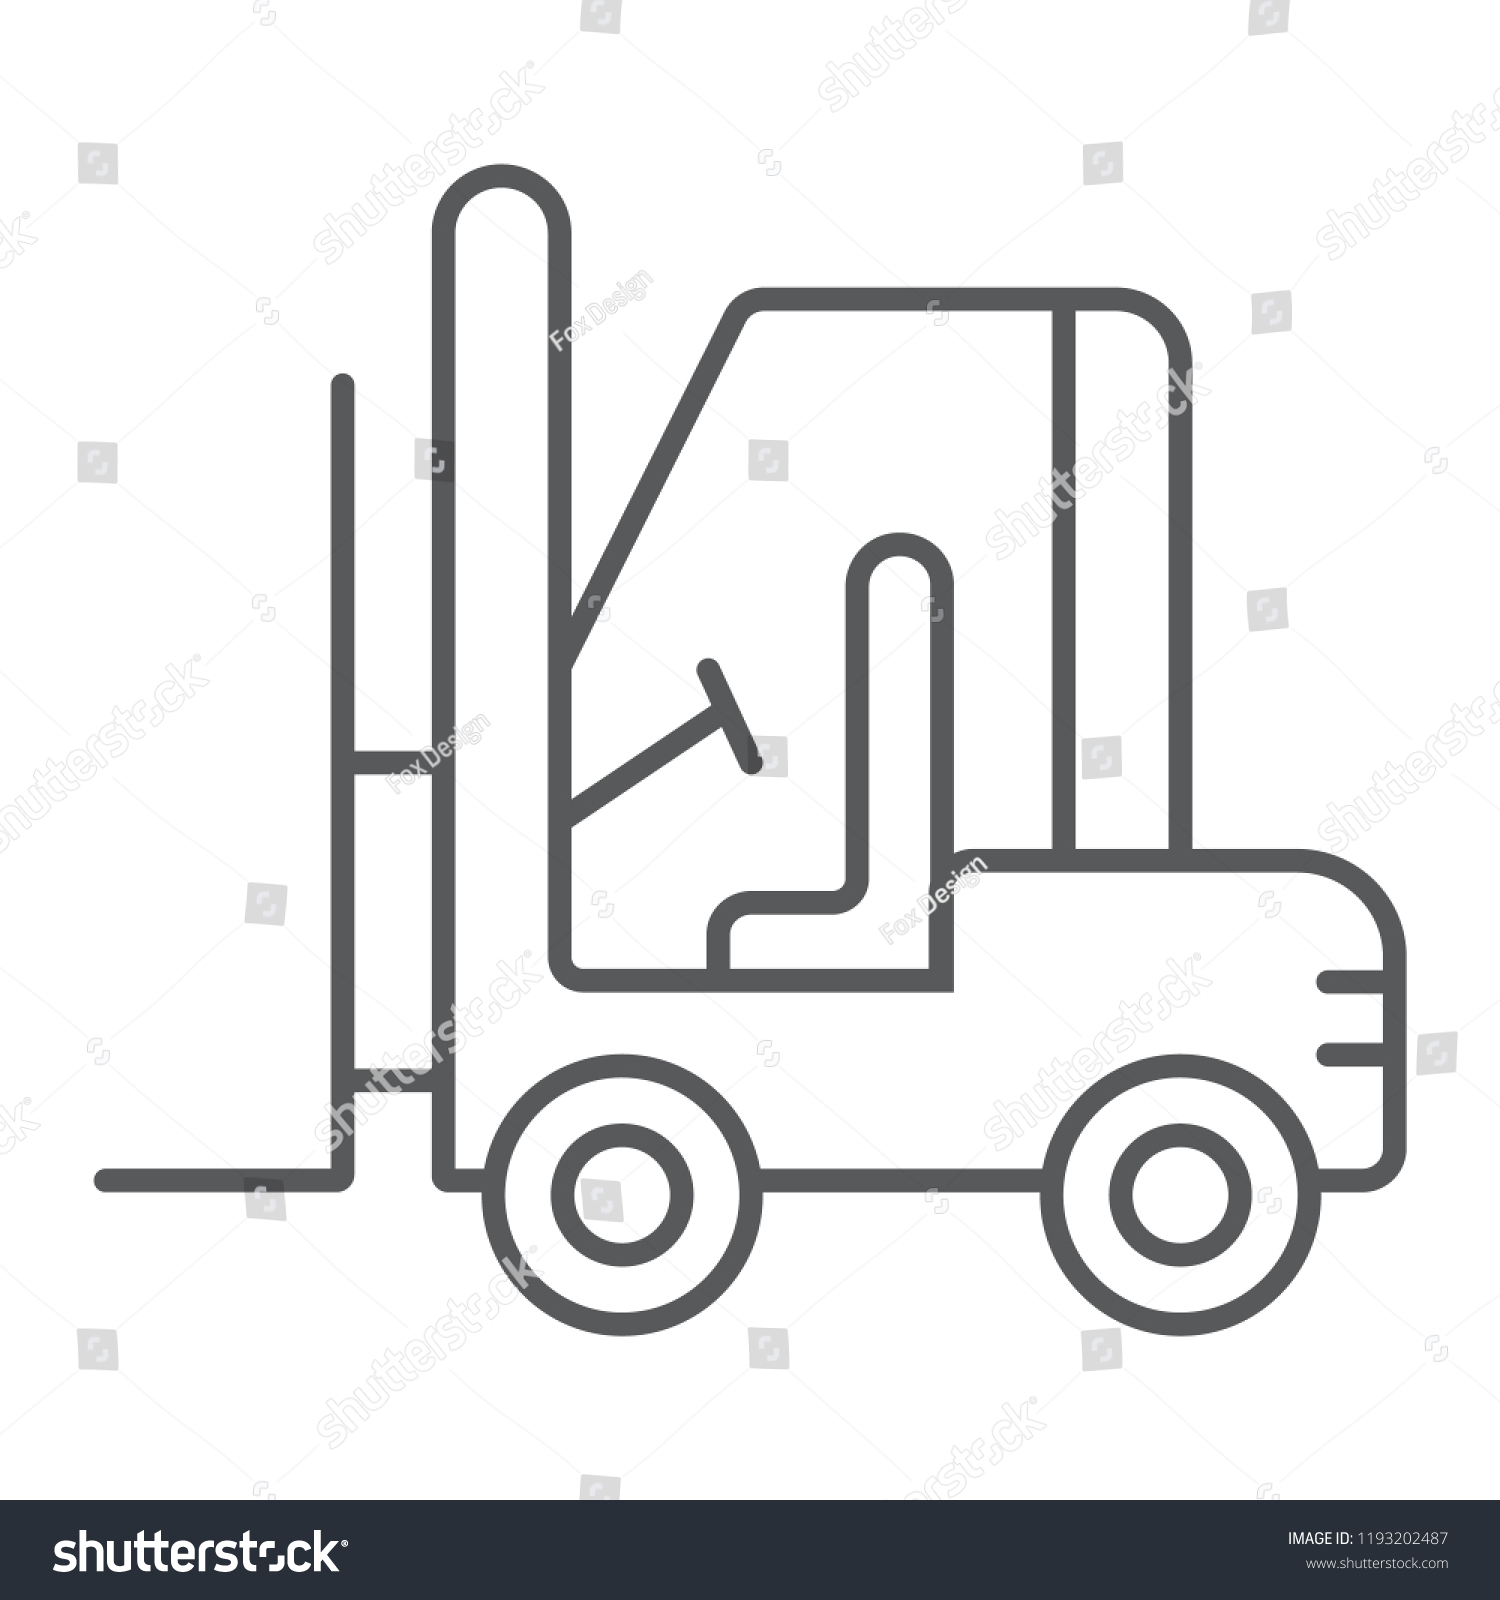 Forklift outline Images, Stock Photos & Vectors | Shutterstock